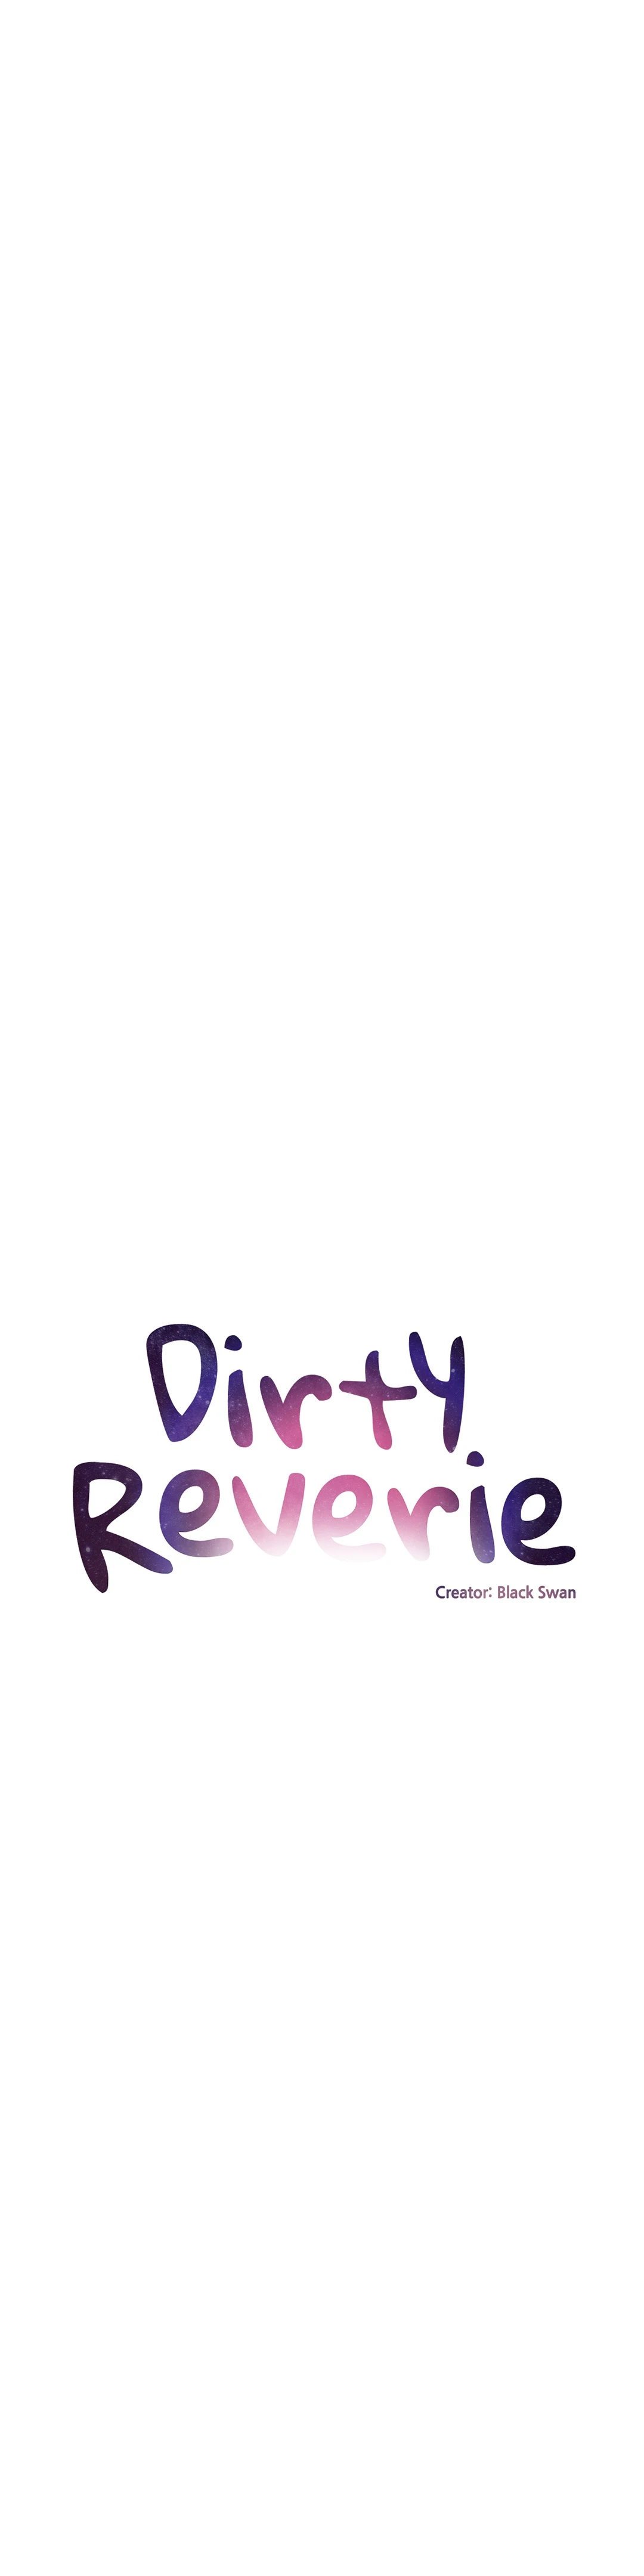 dirty-reverie-chap-7-0